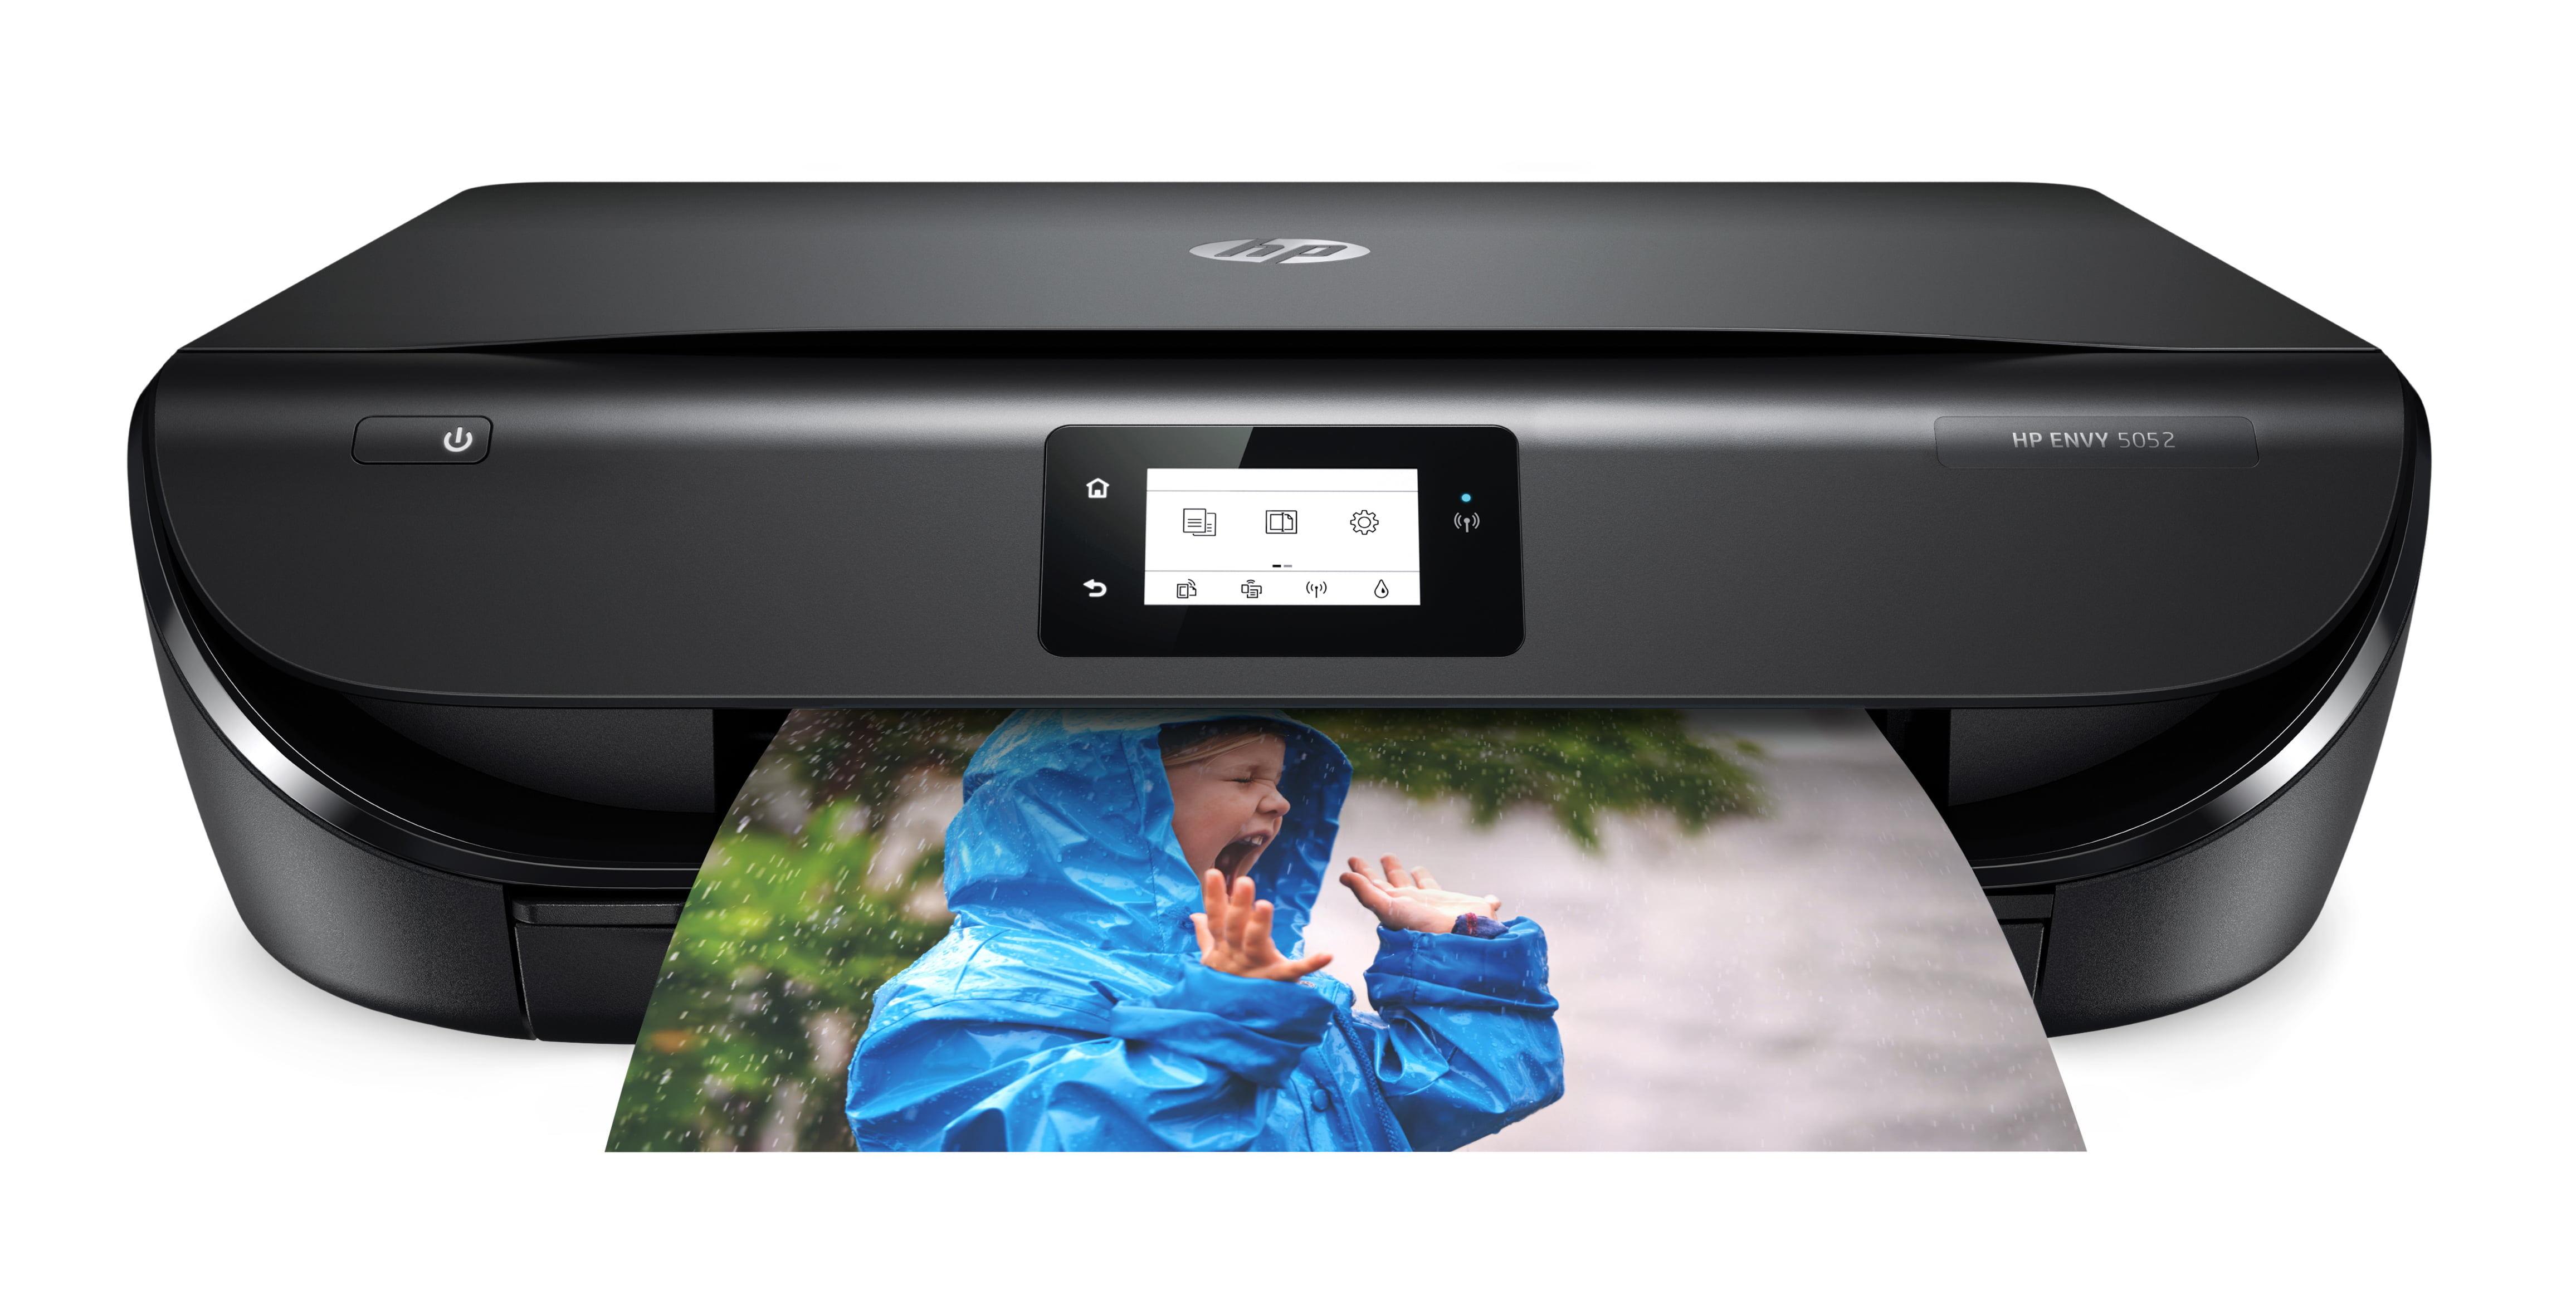 Hp Envy 5052 AllInOne Wireless Color Inkjet Printer (M2U92A) Dual